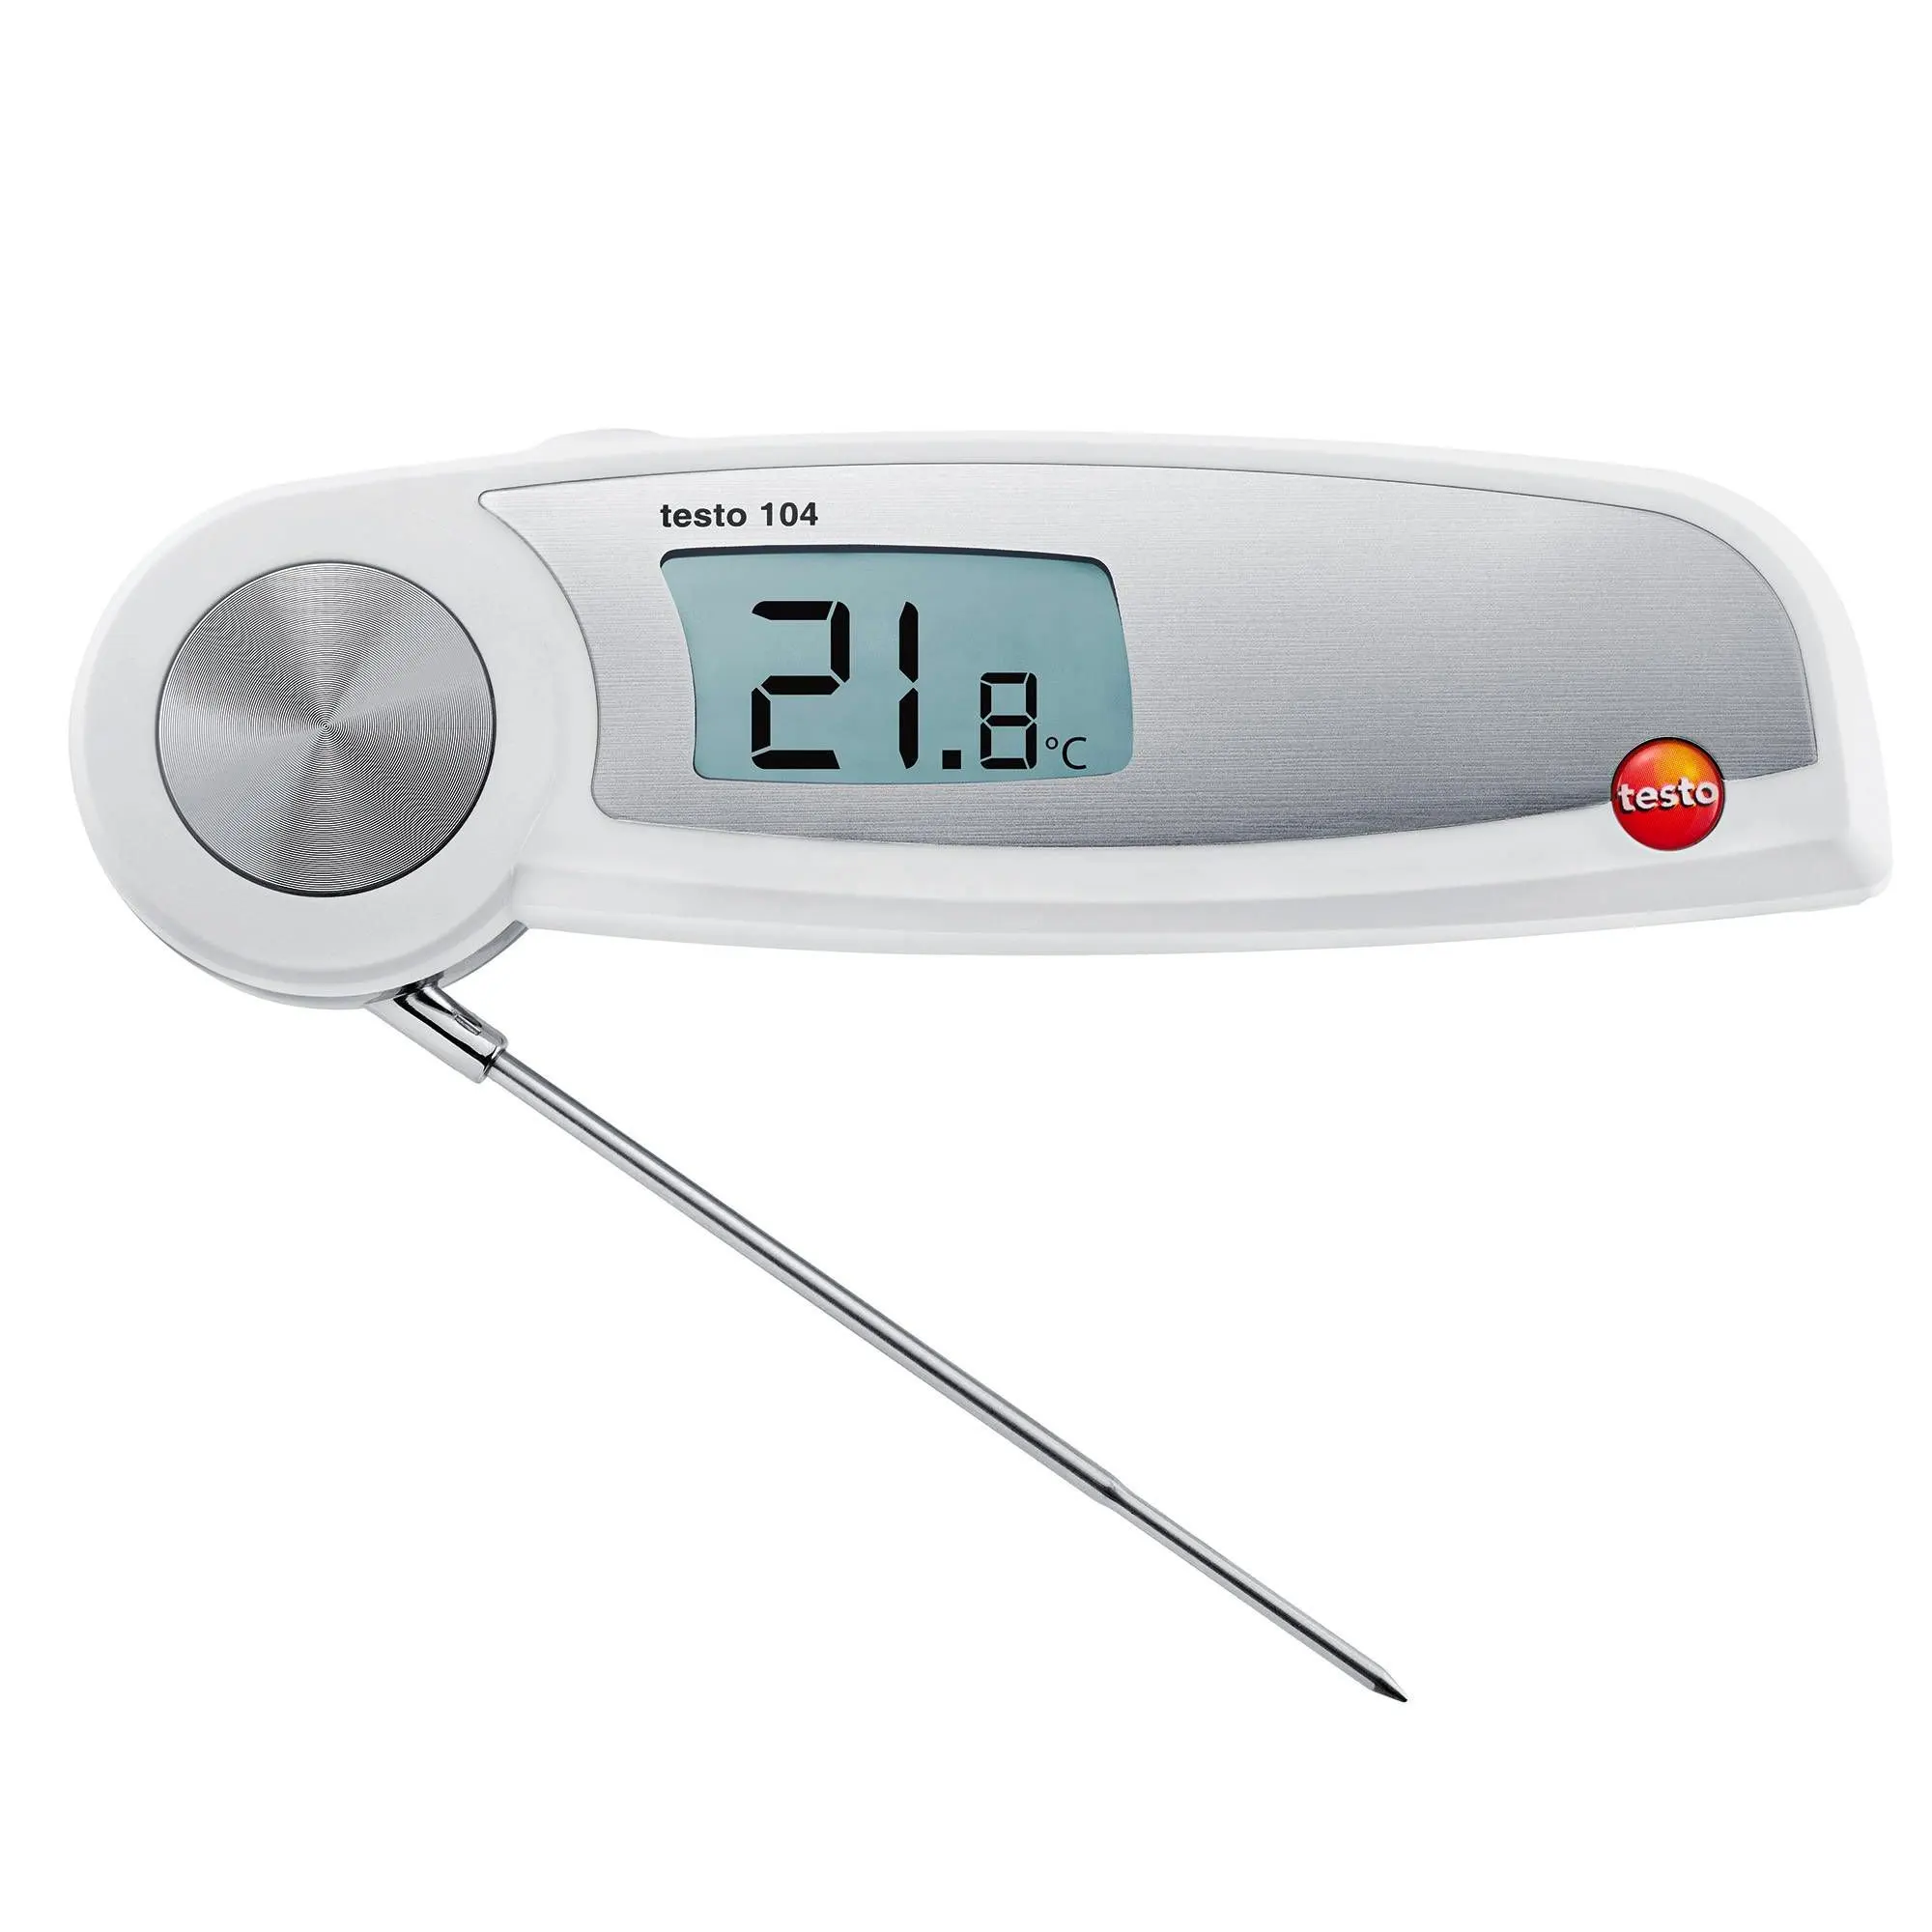 testo 104 lebensmittel-sonden-thermometer mit HACCP-konformität, wasserdichter lebensmittelthermometer testo 104 (Bestellnummer 0563 0104)